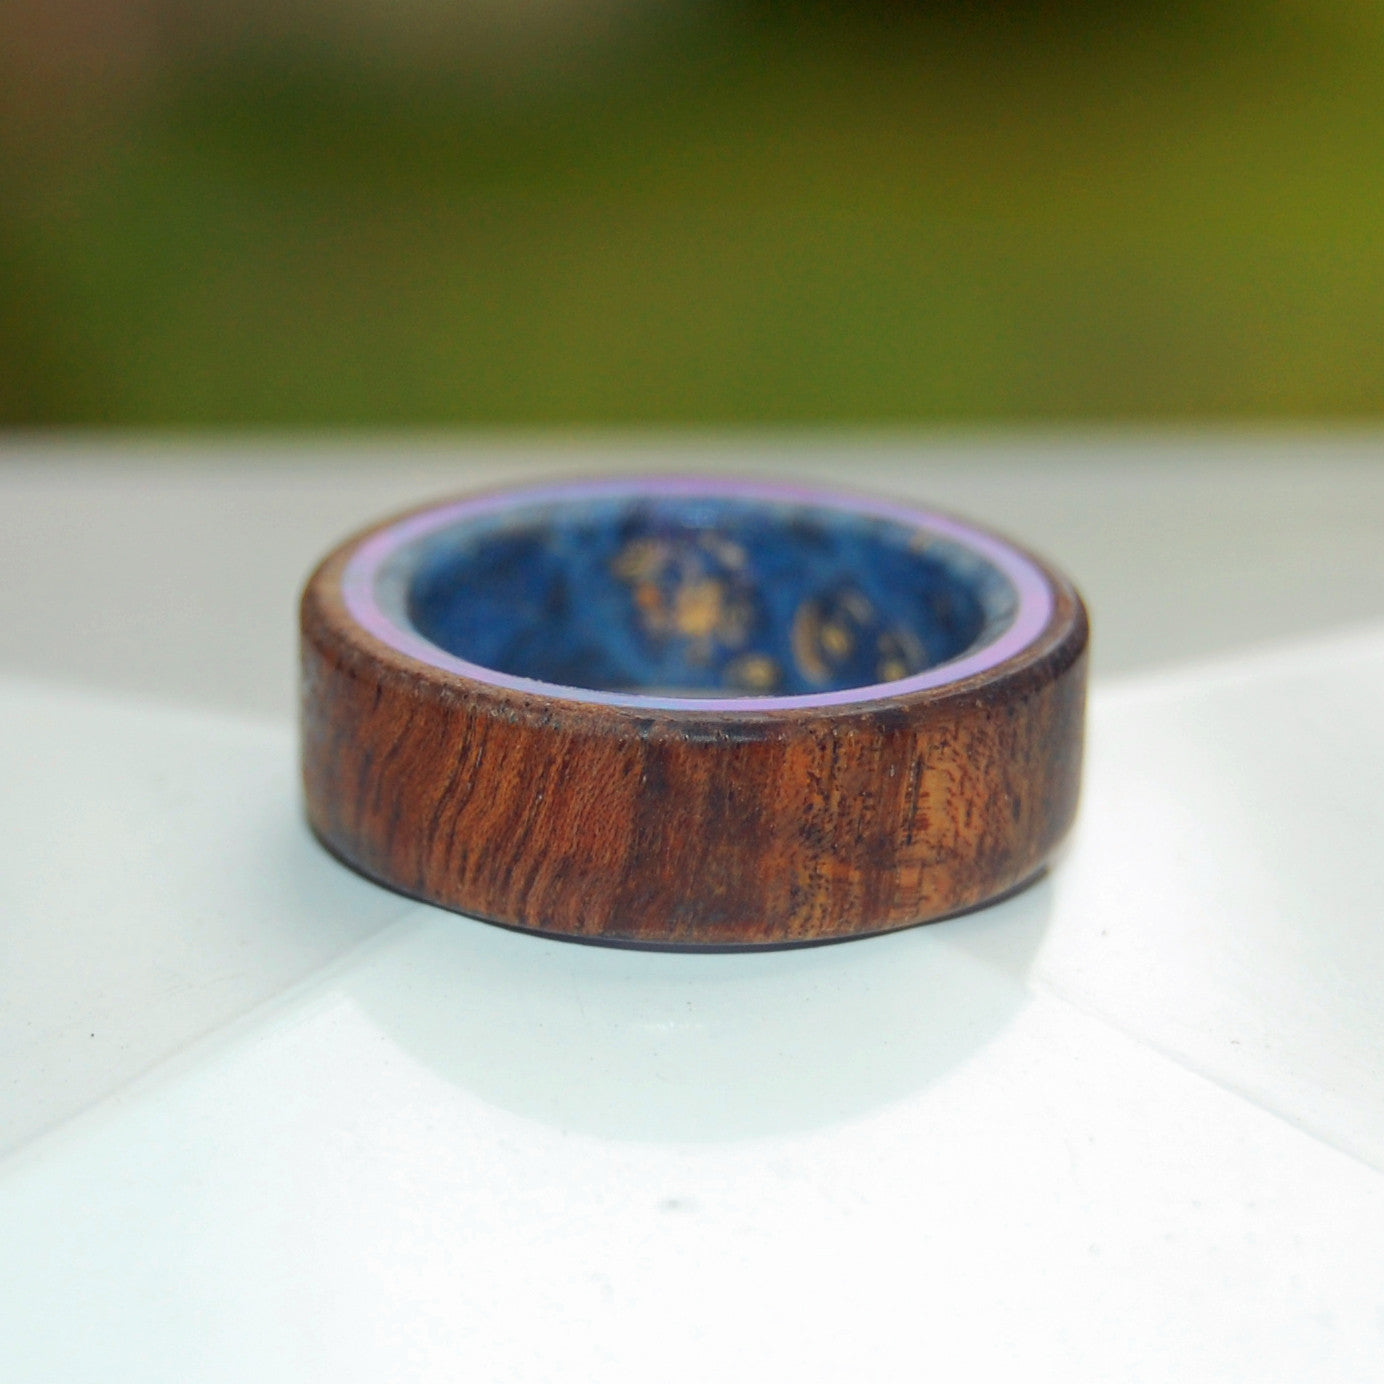 POSEIDON | Koa Wood & Blue Box Elder Titanium Wedding Rings - Minter and Richter Designs